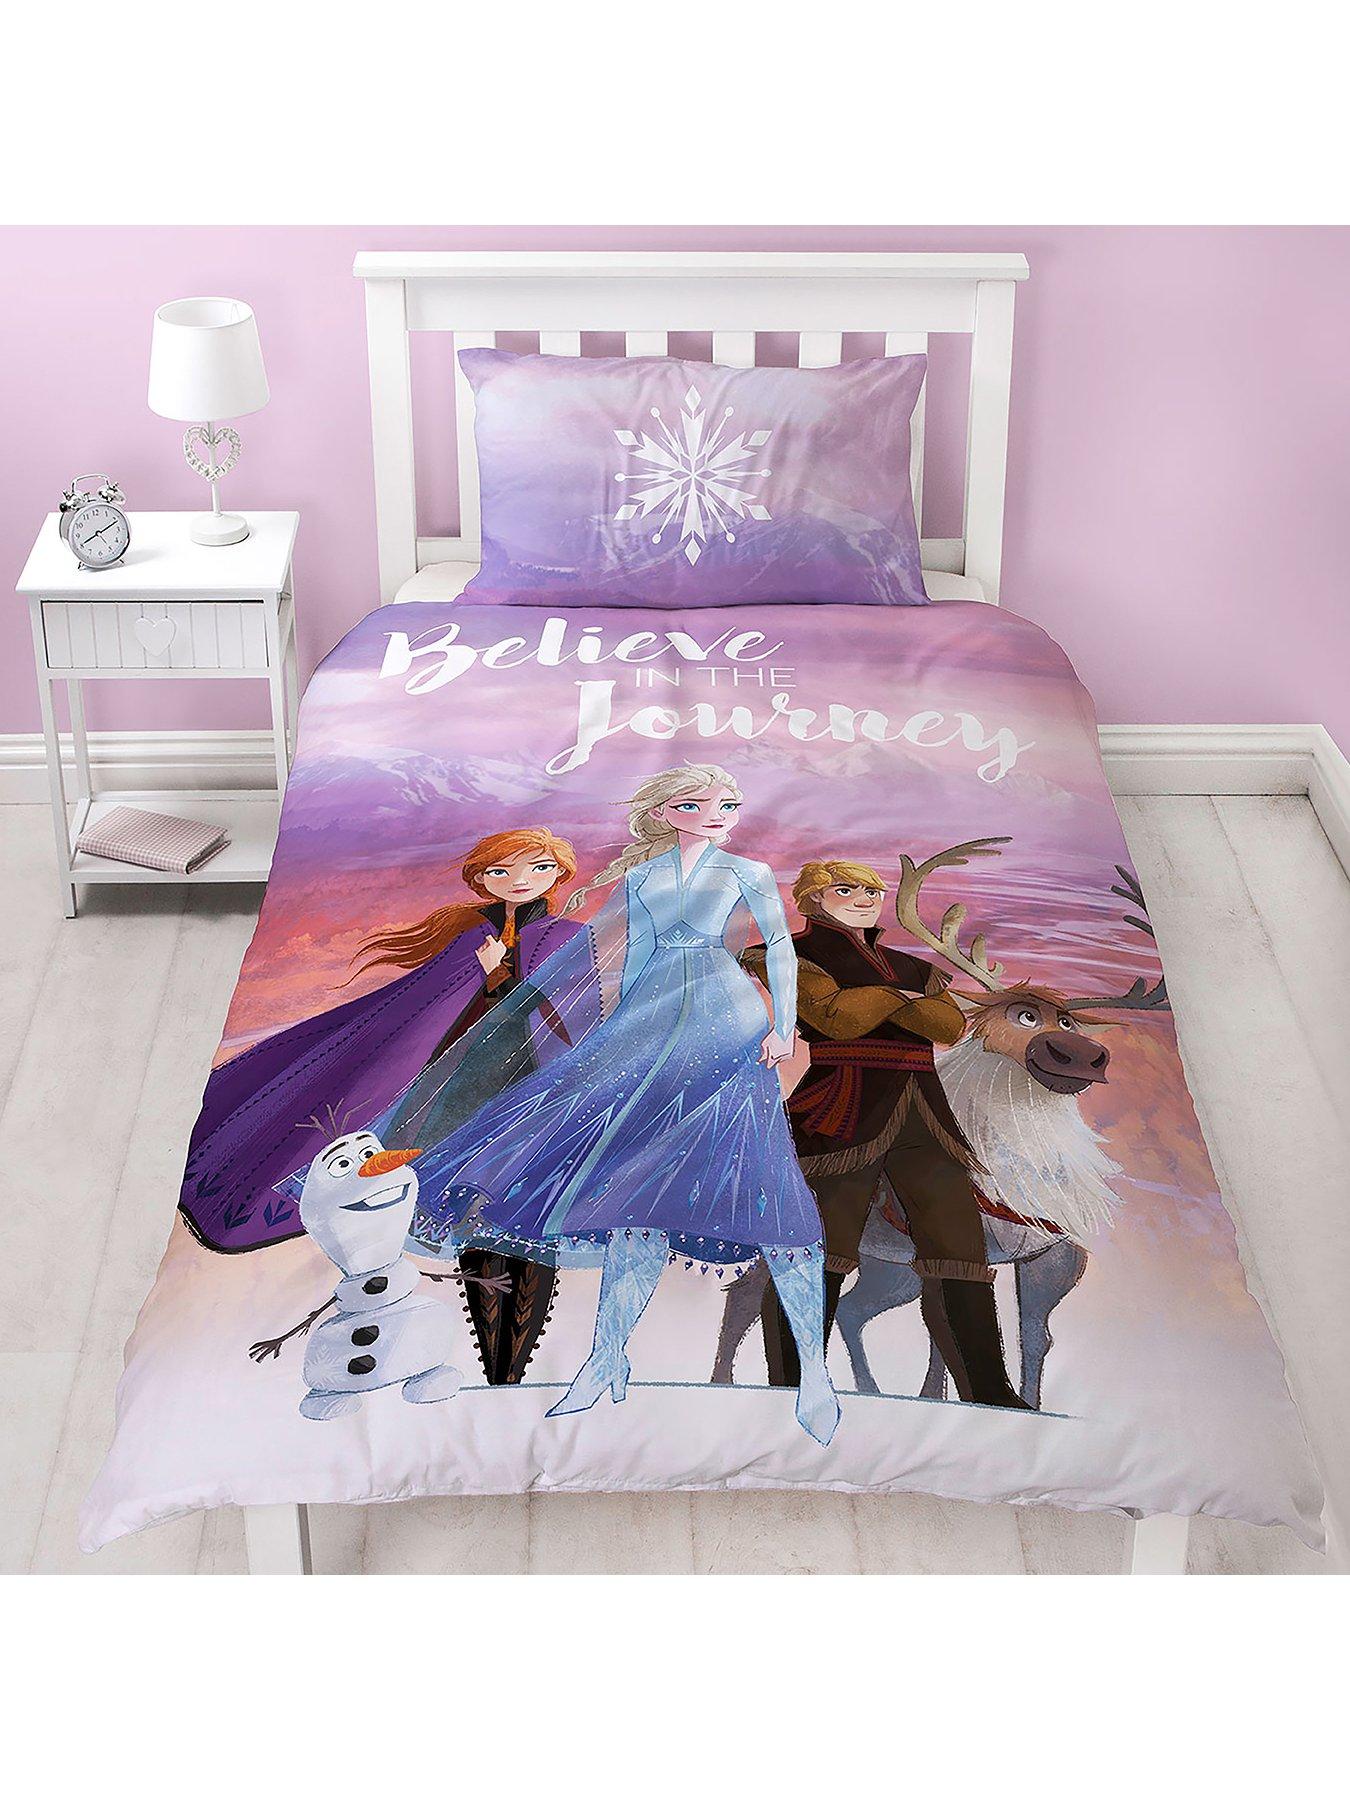 Latest Offers Purple Purple Duvet Covers Bedding Home